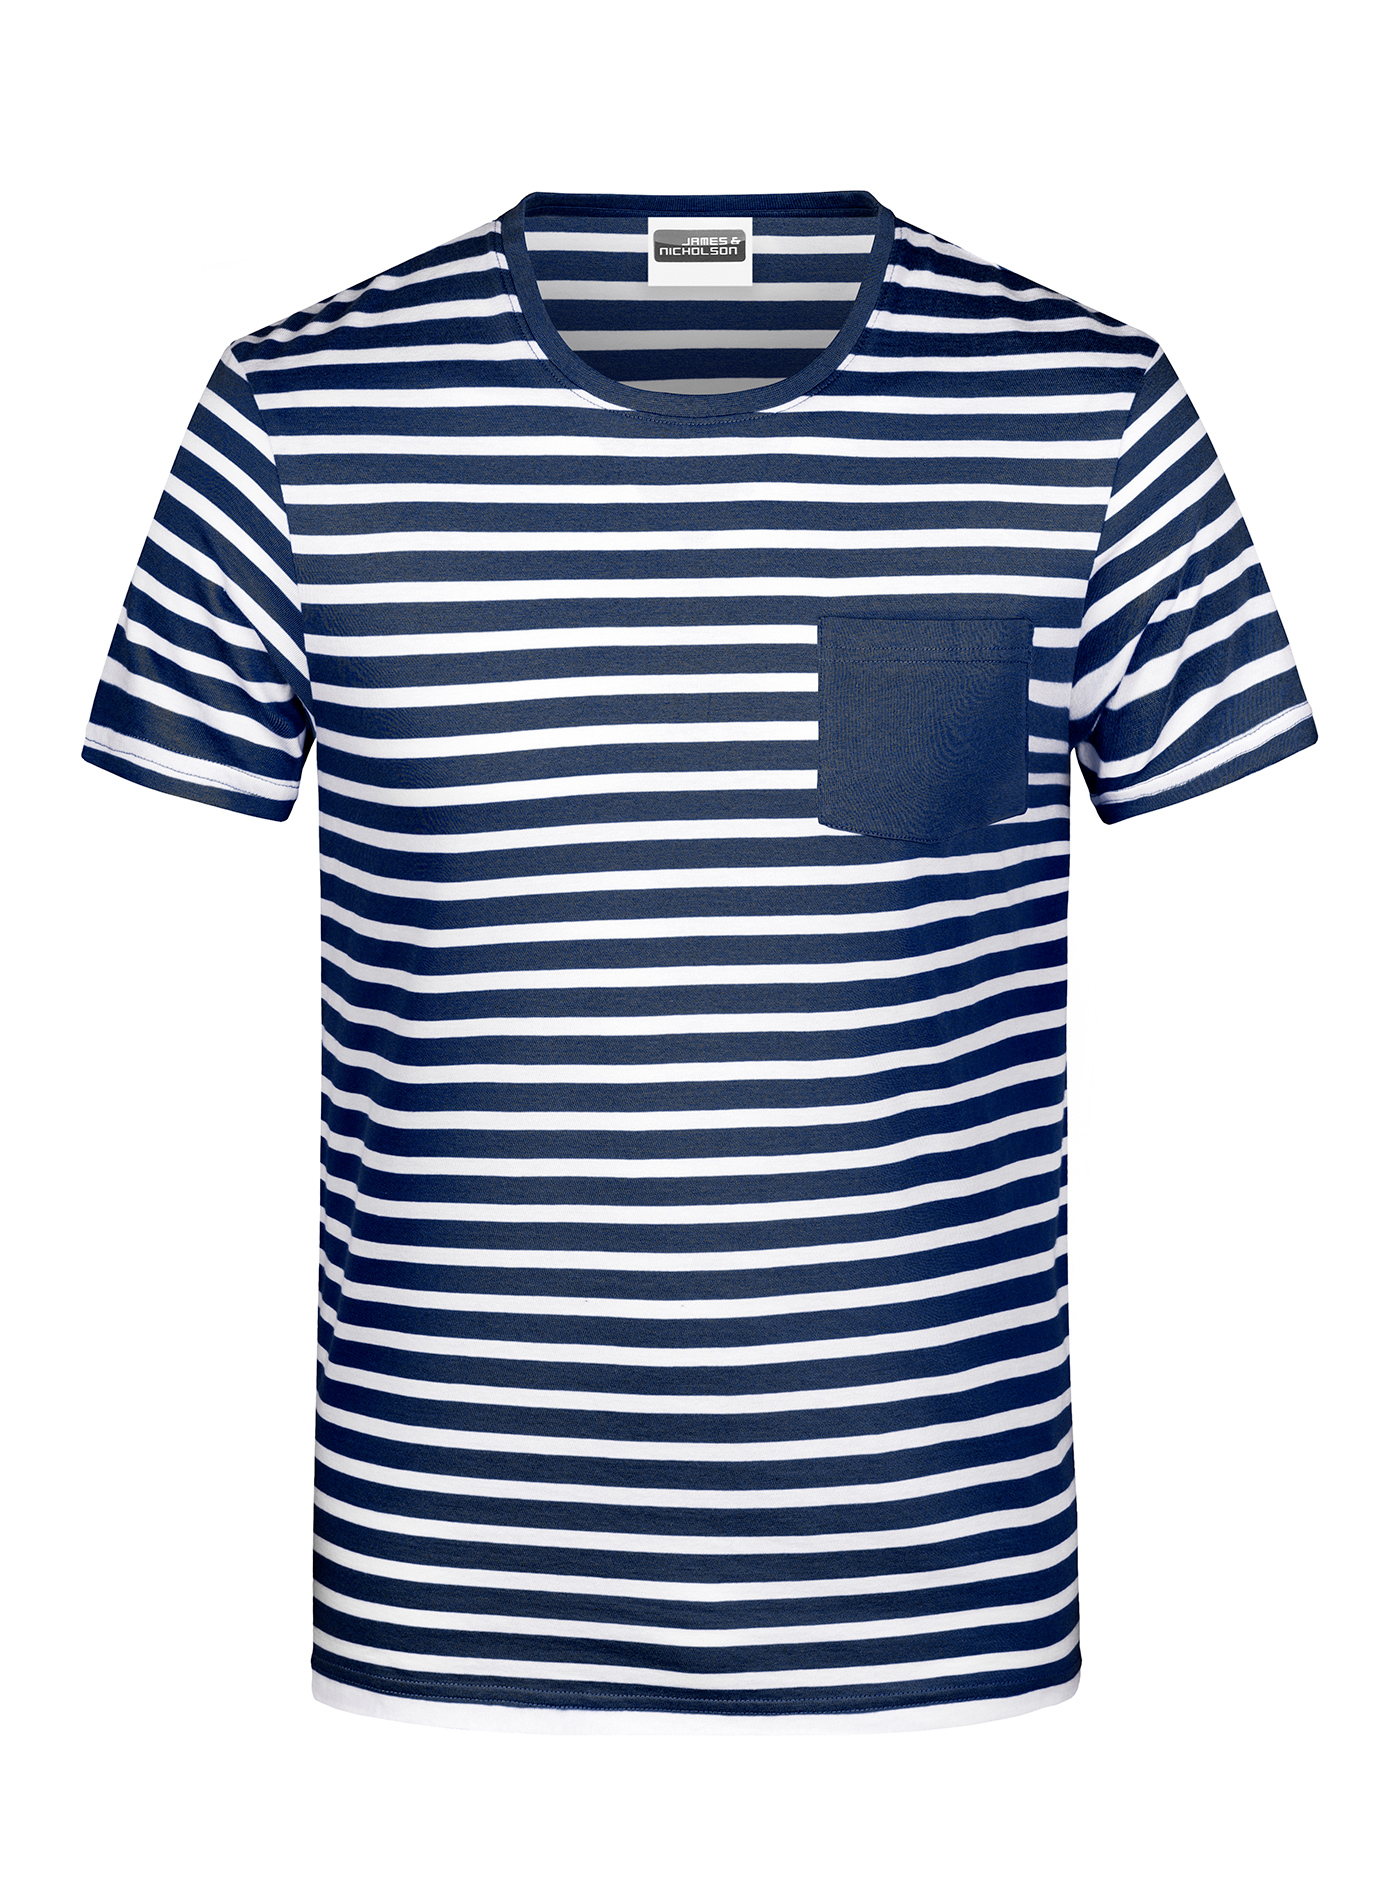 Pánské pruhované tričko James & Nicholson - Tmavě modrá a bílá S